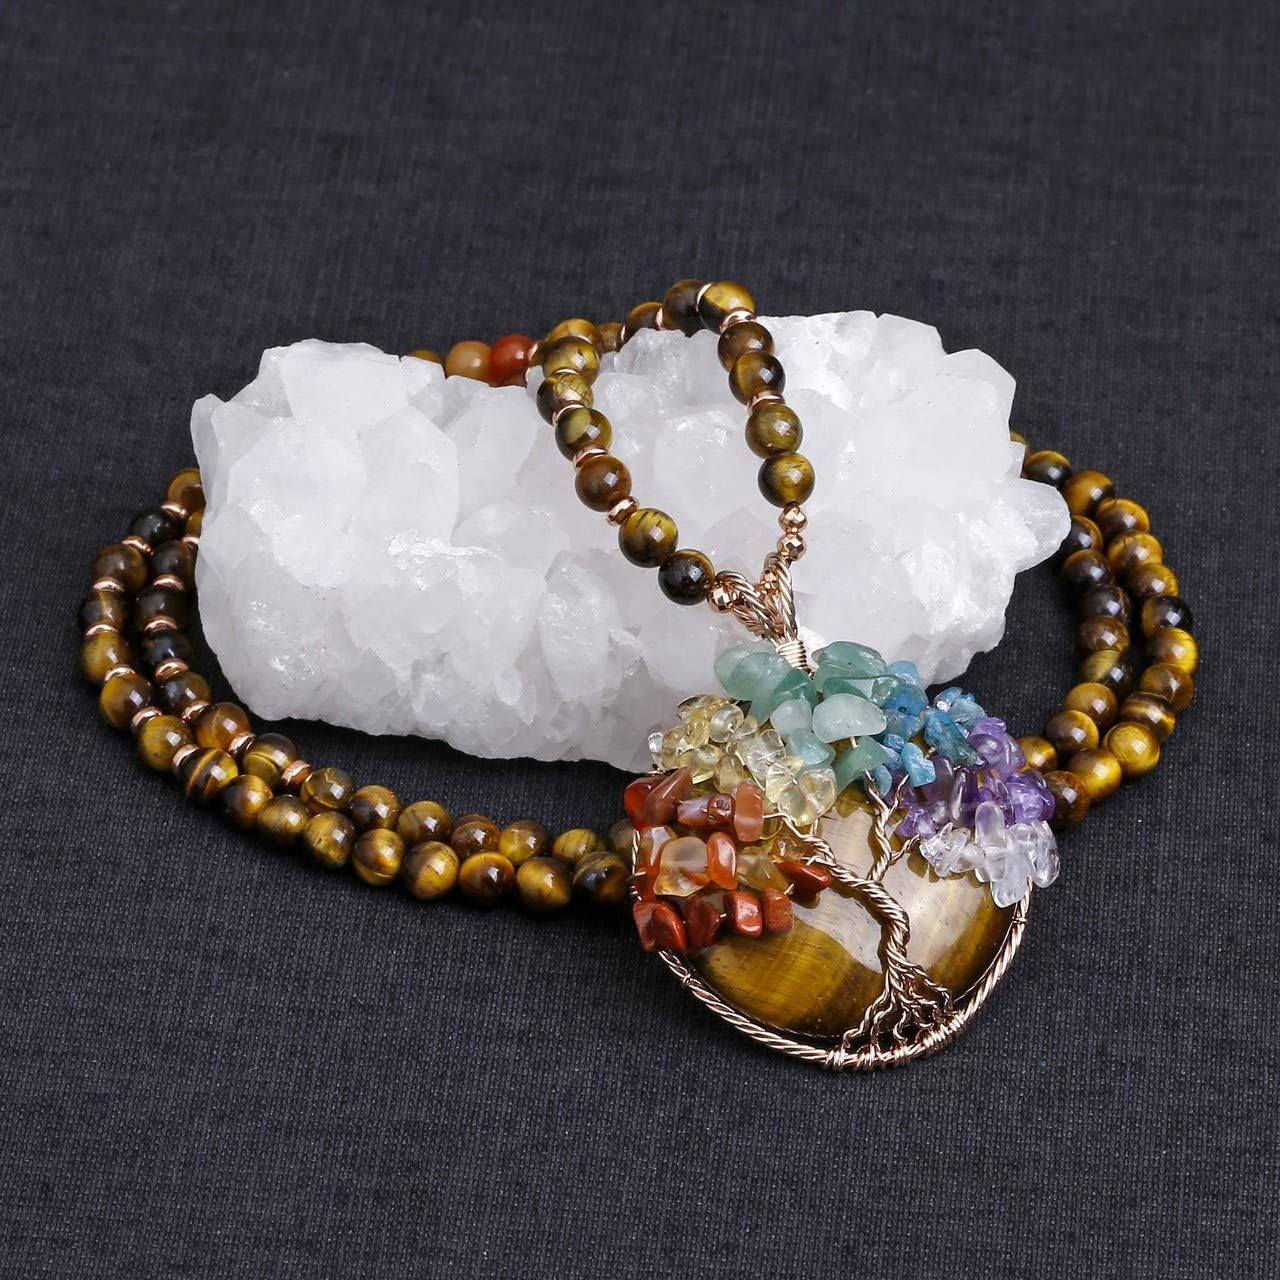 7 Chakra Reiki Repair Crystal Natural Gemstone Pendant Necklace Bracelet Silver Tree of Life Pendant Jewelry Set for Balance Meditation